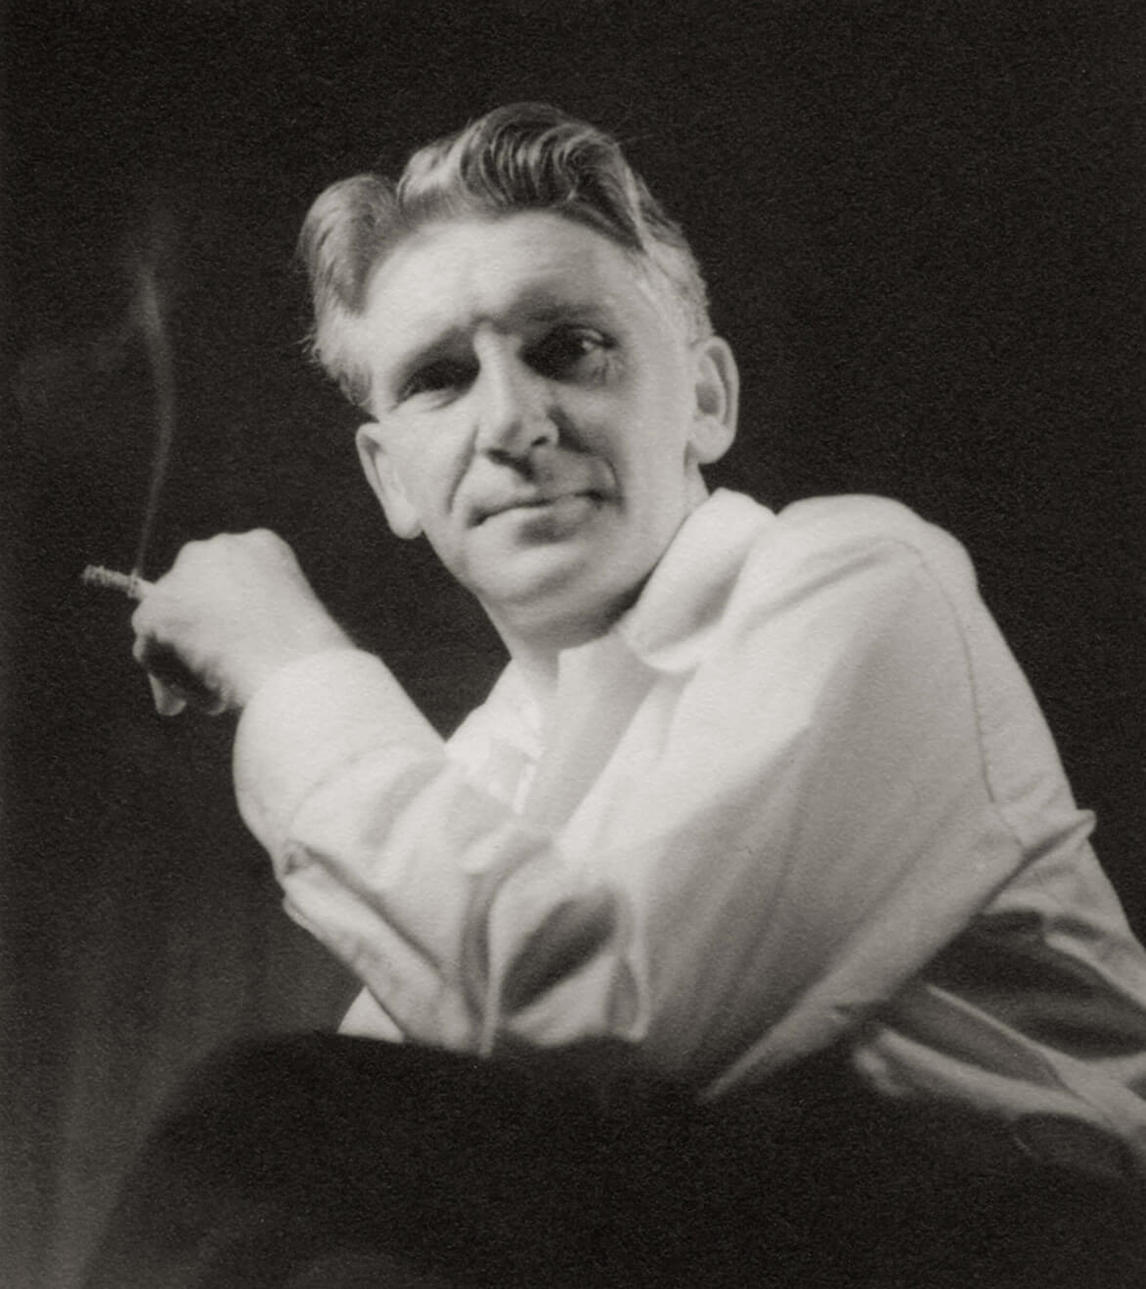 Art Canada Institute, Portrait of Bertram Brooker, 1930s or 1940s